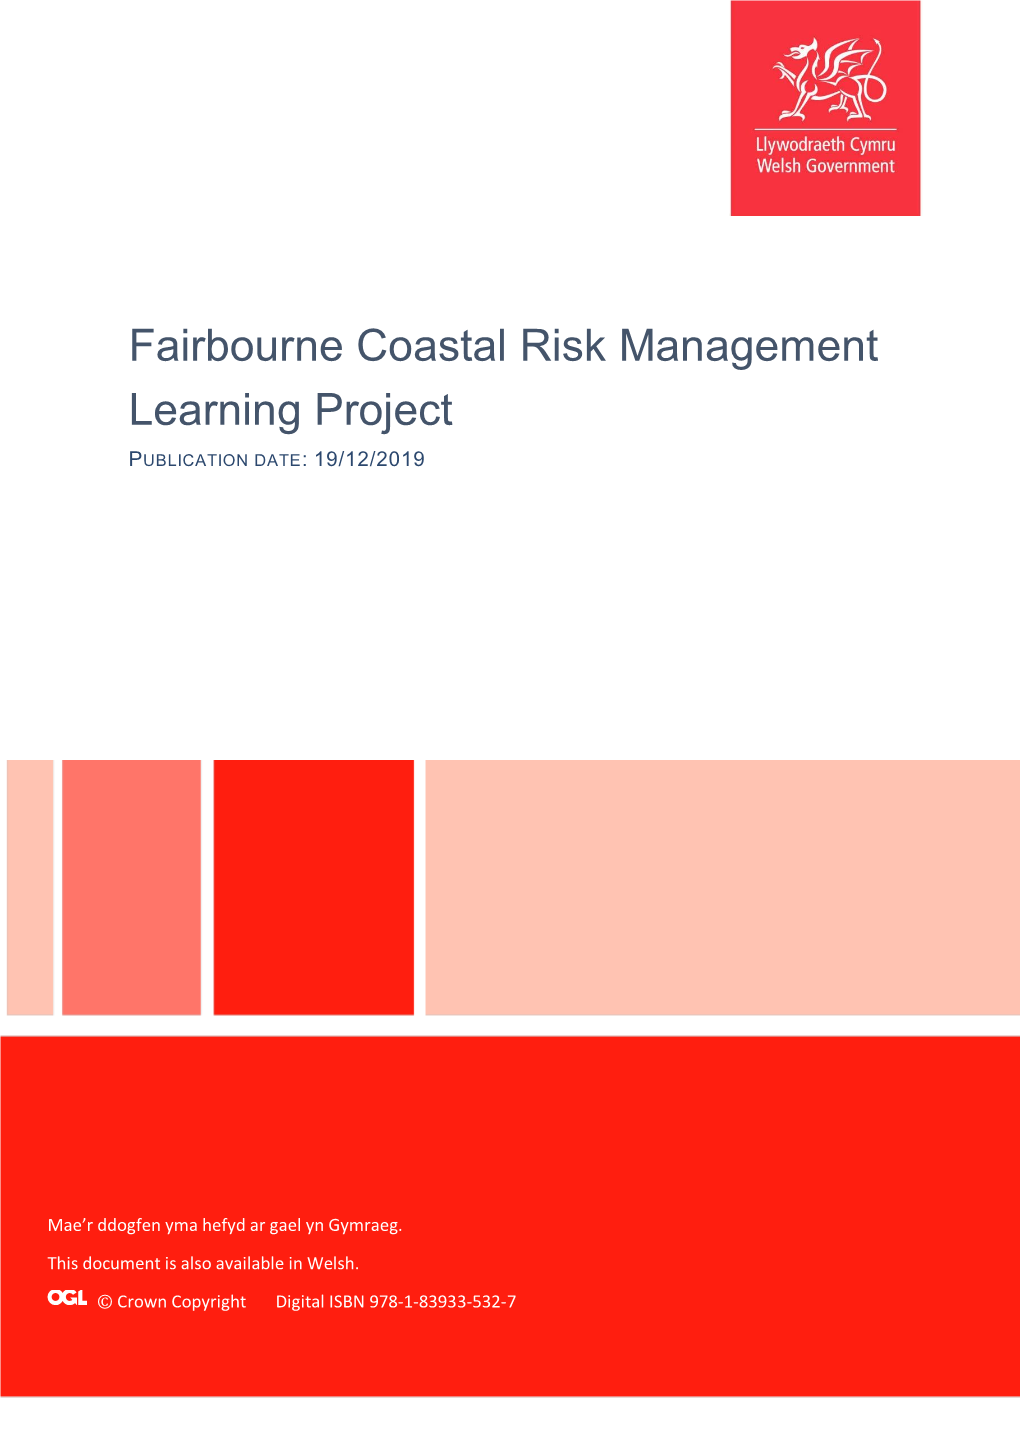 Fairbourne Coastal Risk Management Learning Project